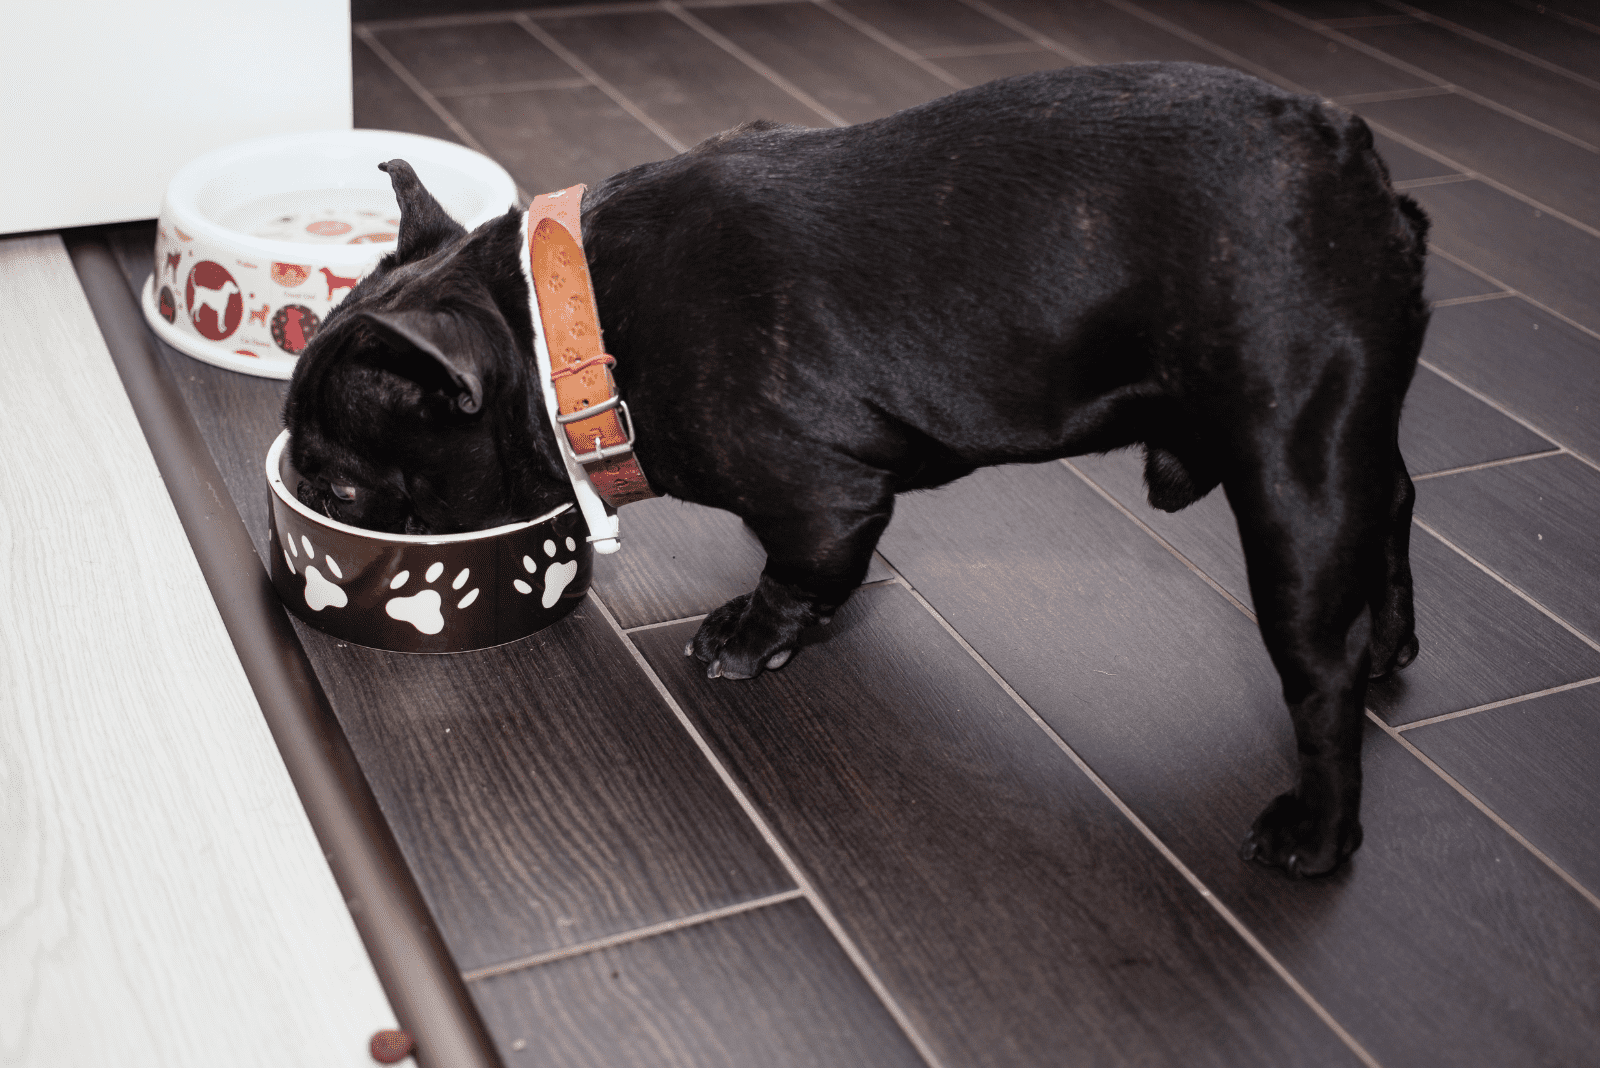 French Bulldog eats from a black bowl